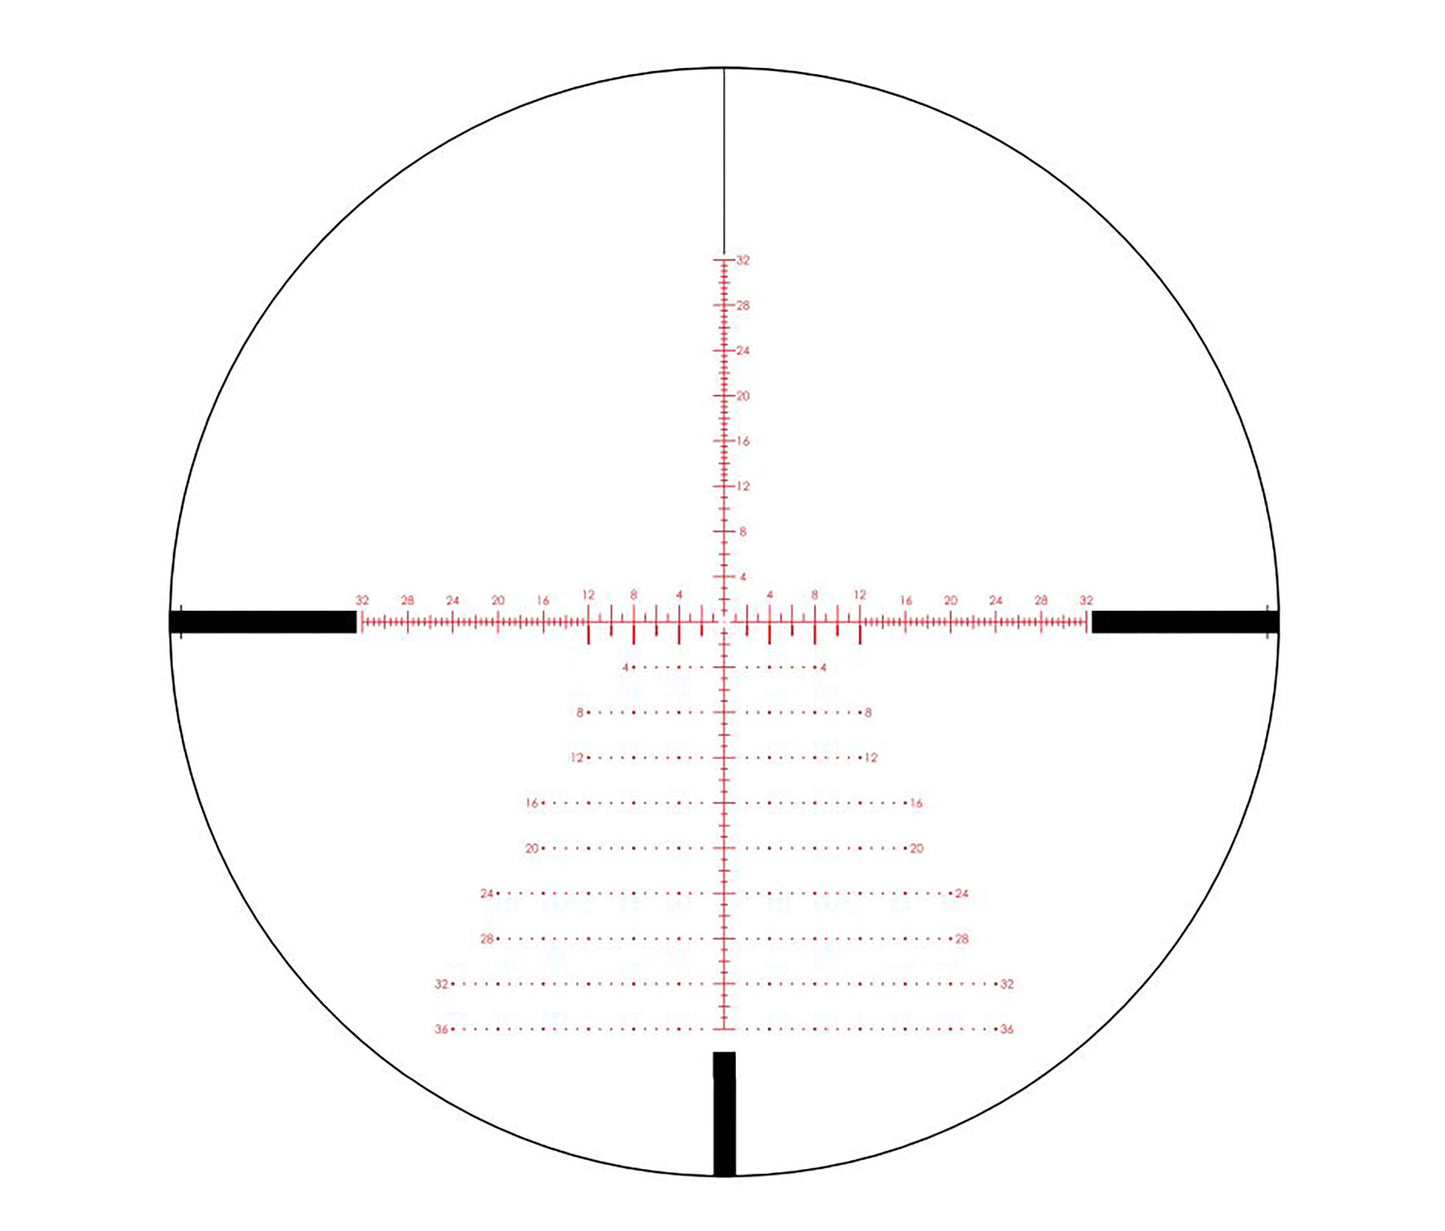 Vortex Optics Viper PST Gen II 5-25x50 First Focal Plane Riflescope - PST-5256